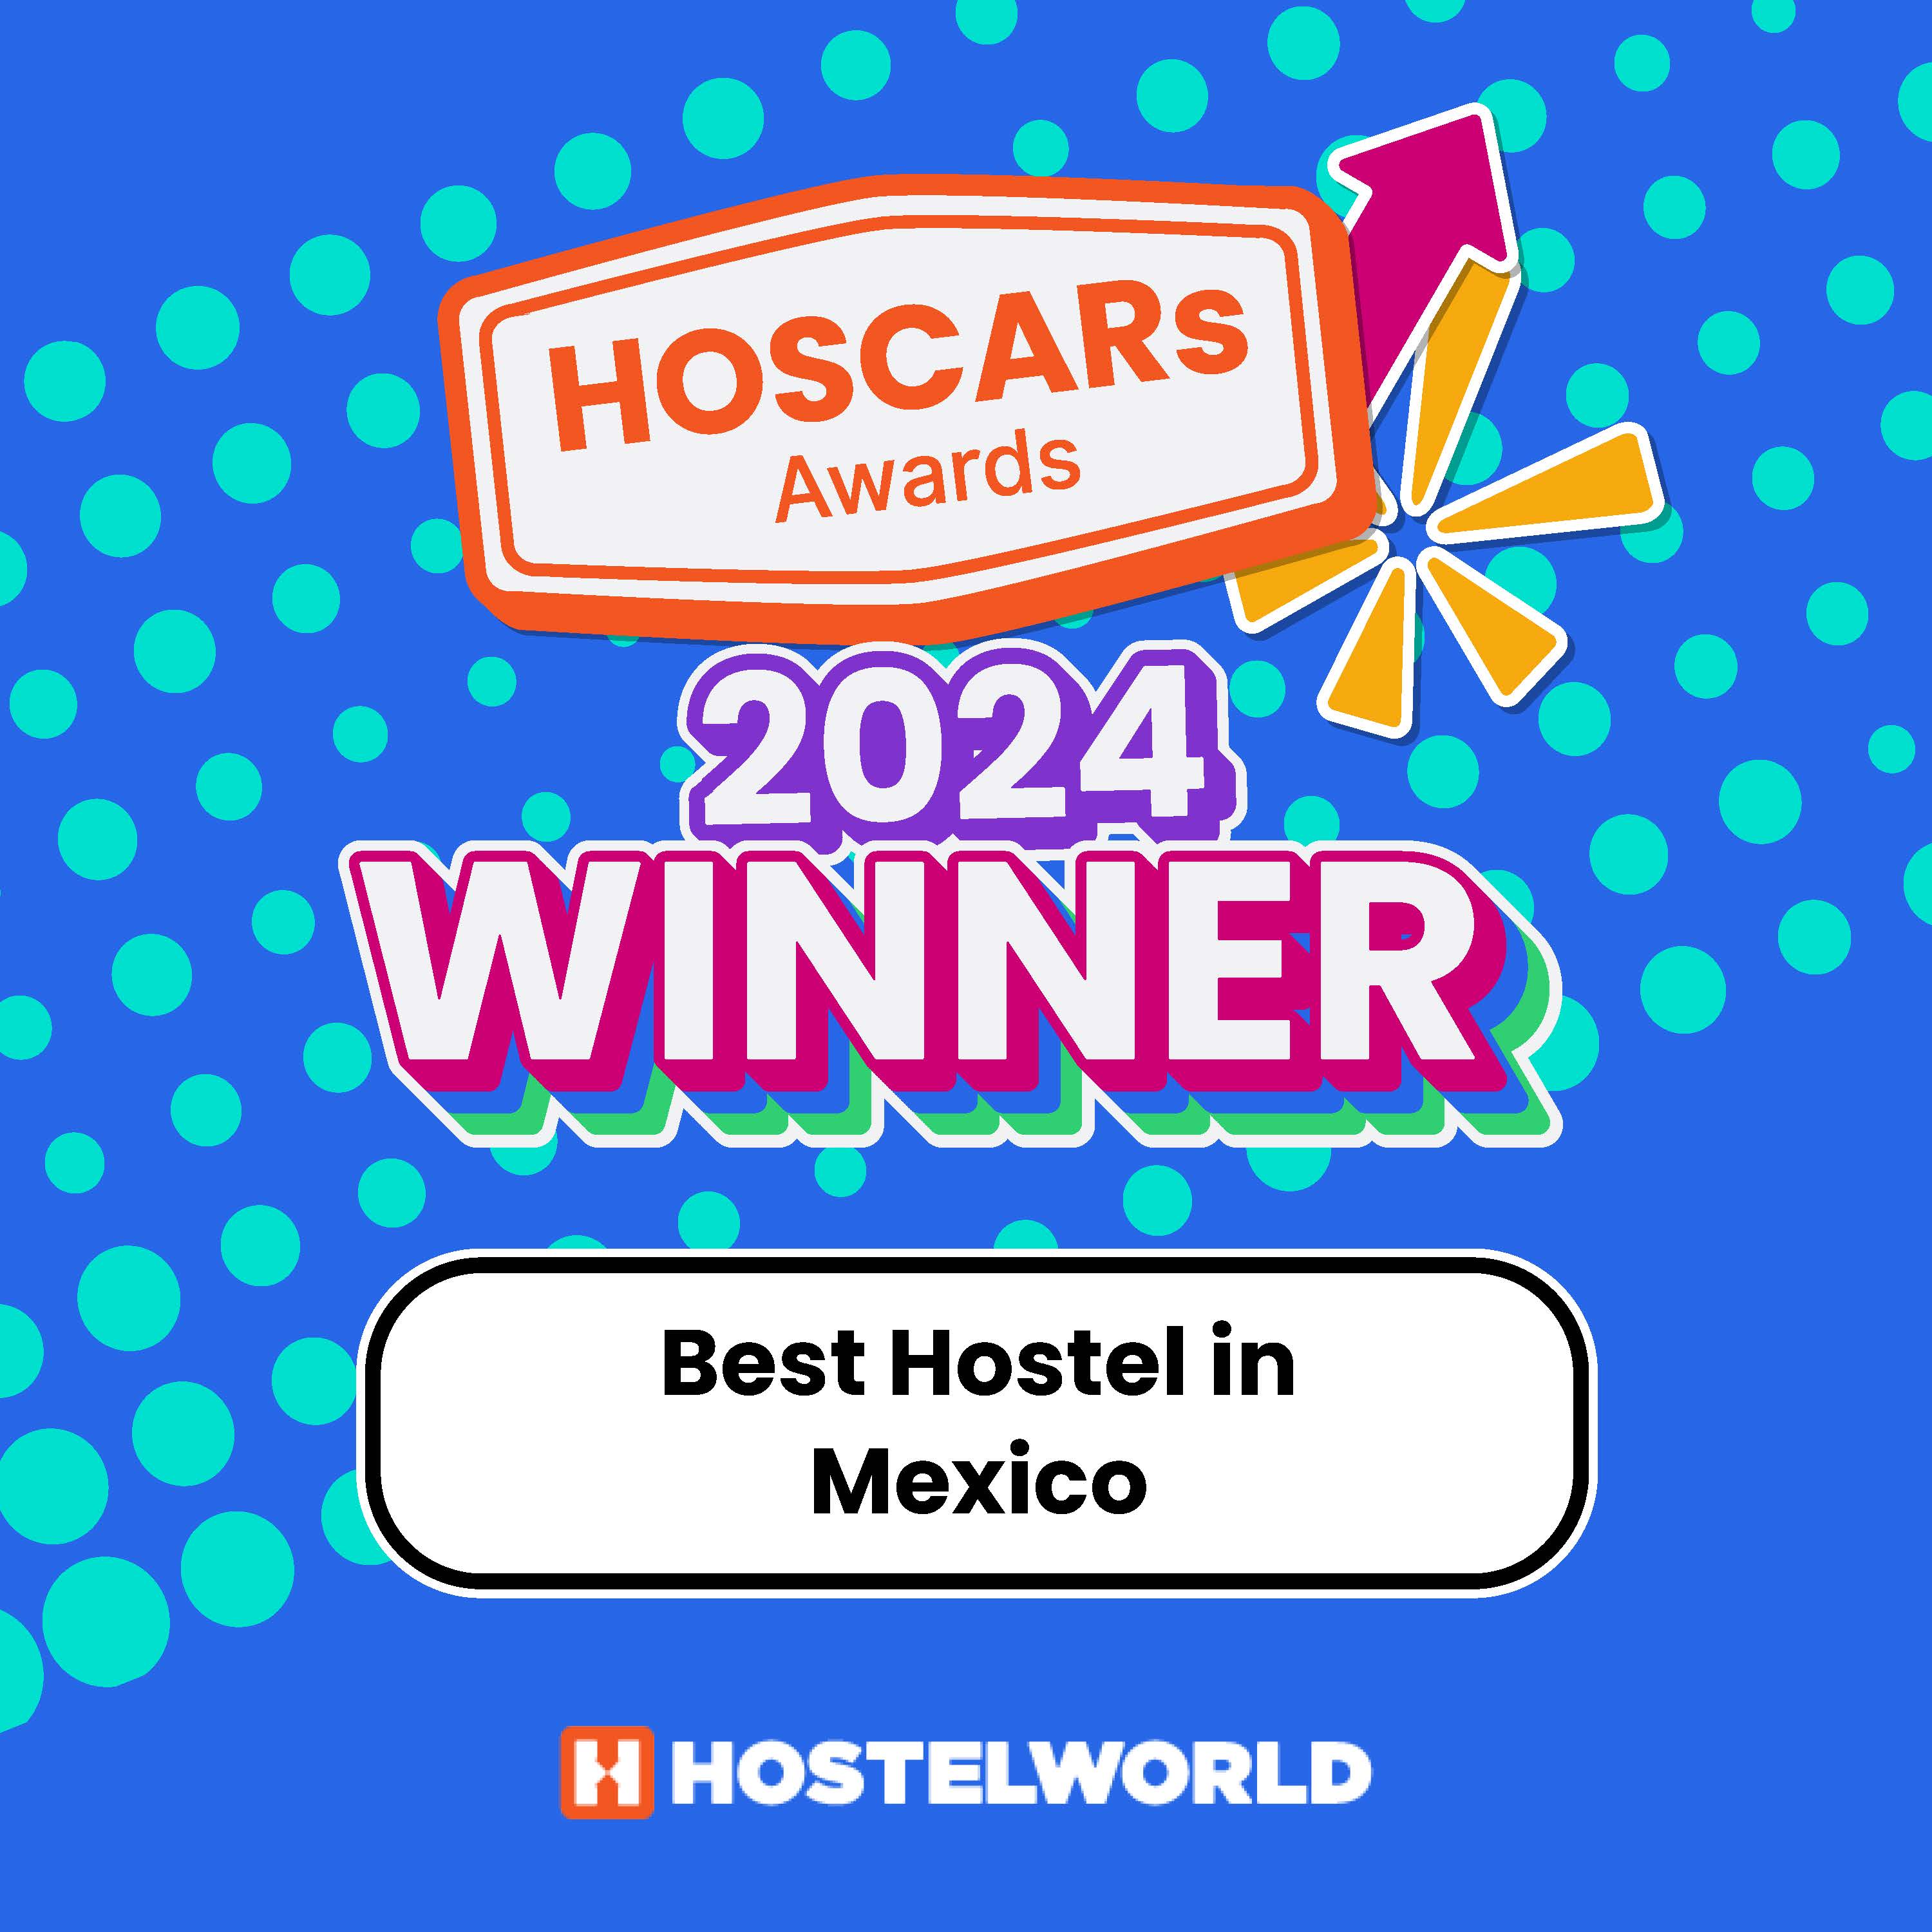 Best Hostel in Mexico